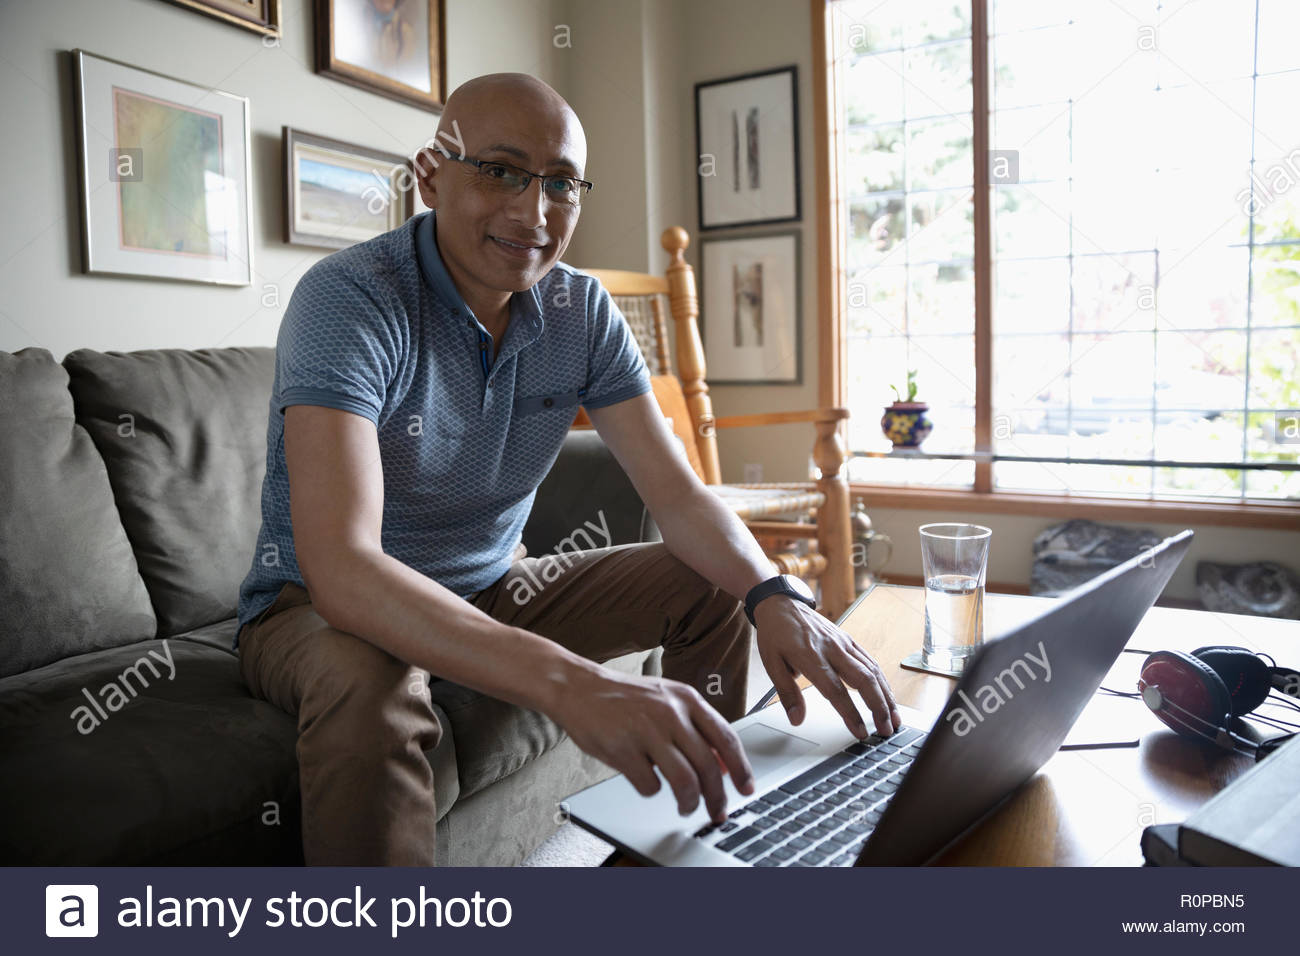 Portrait confident Latinx man using laptop in living room Stock Photo